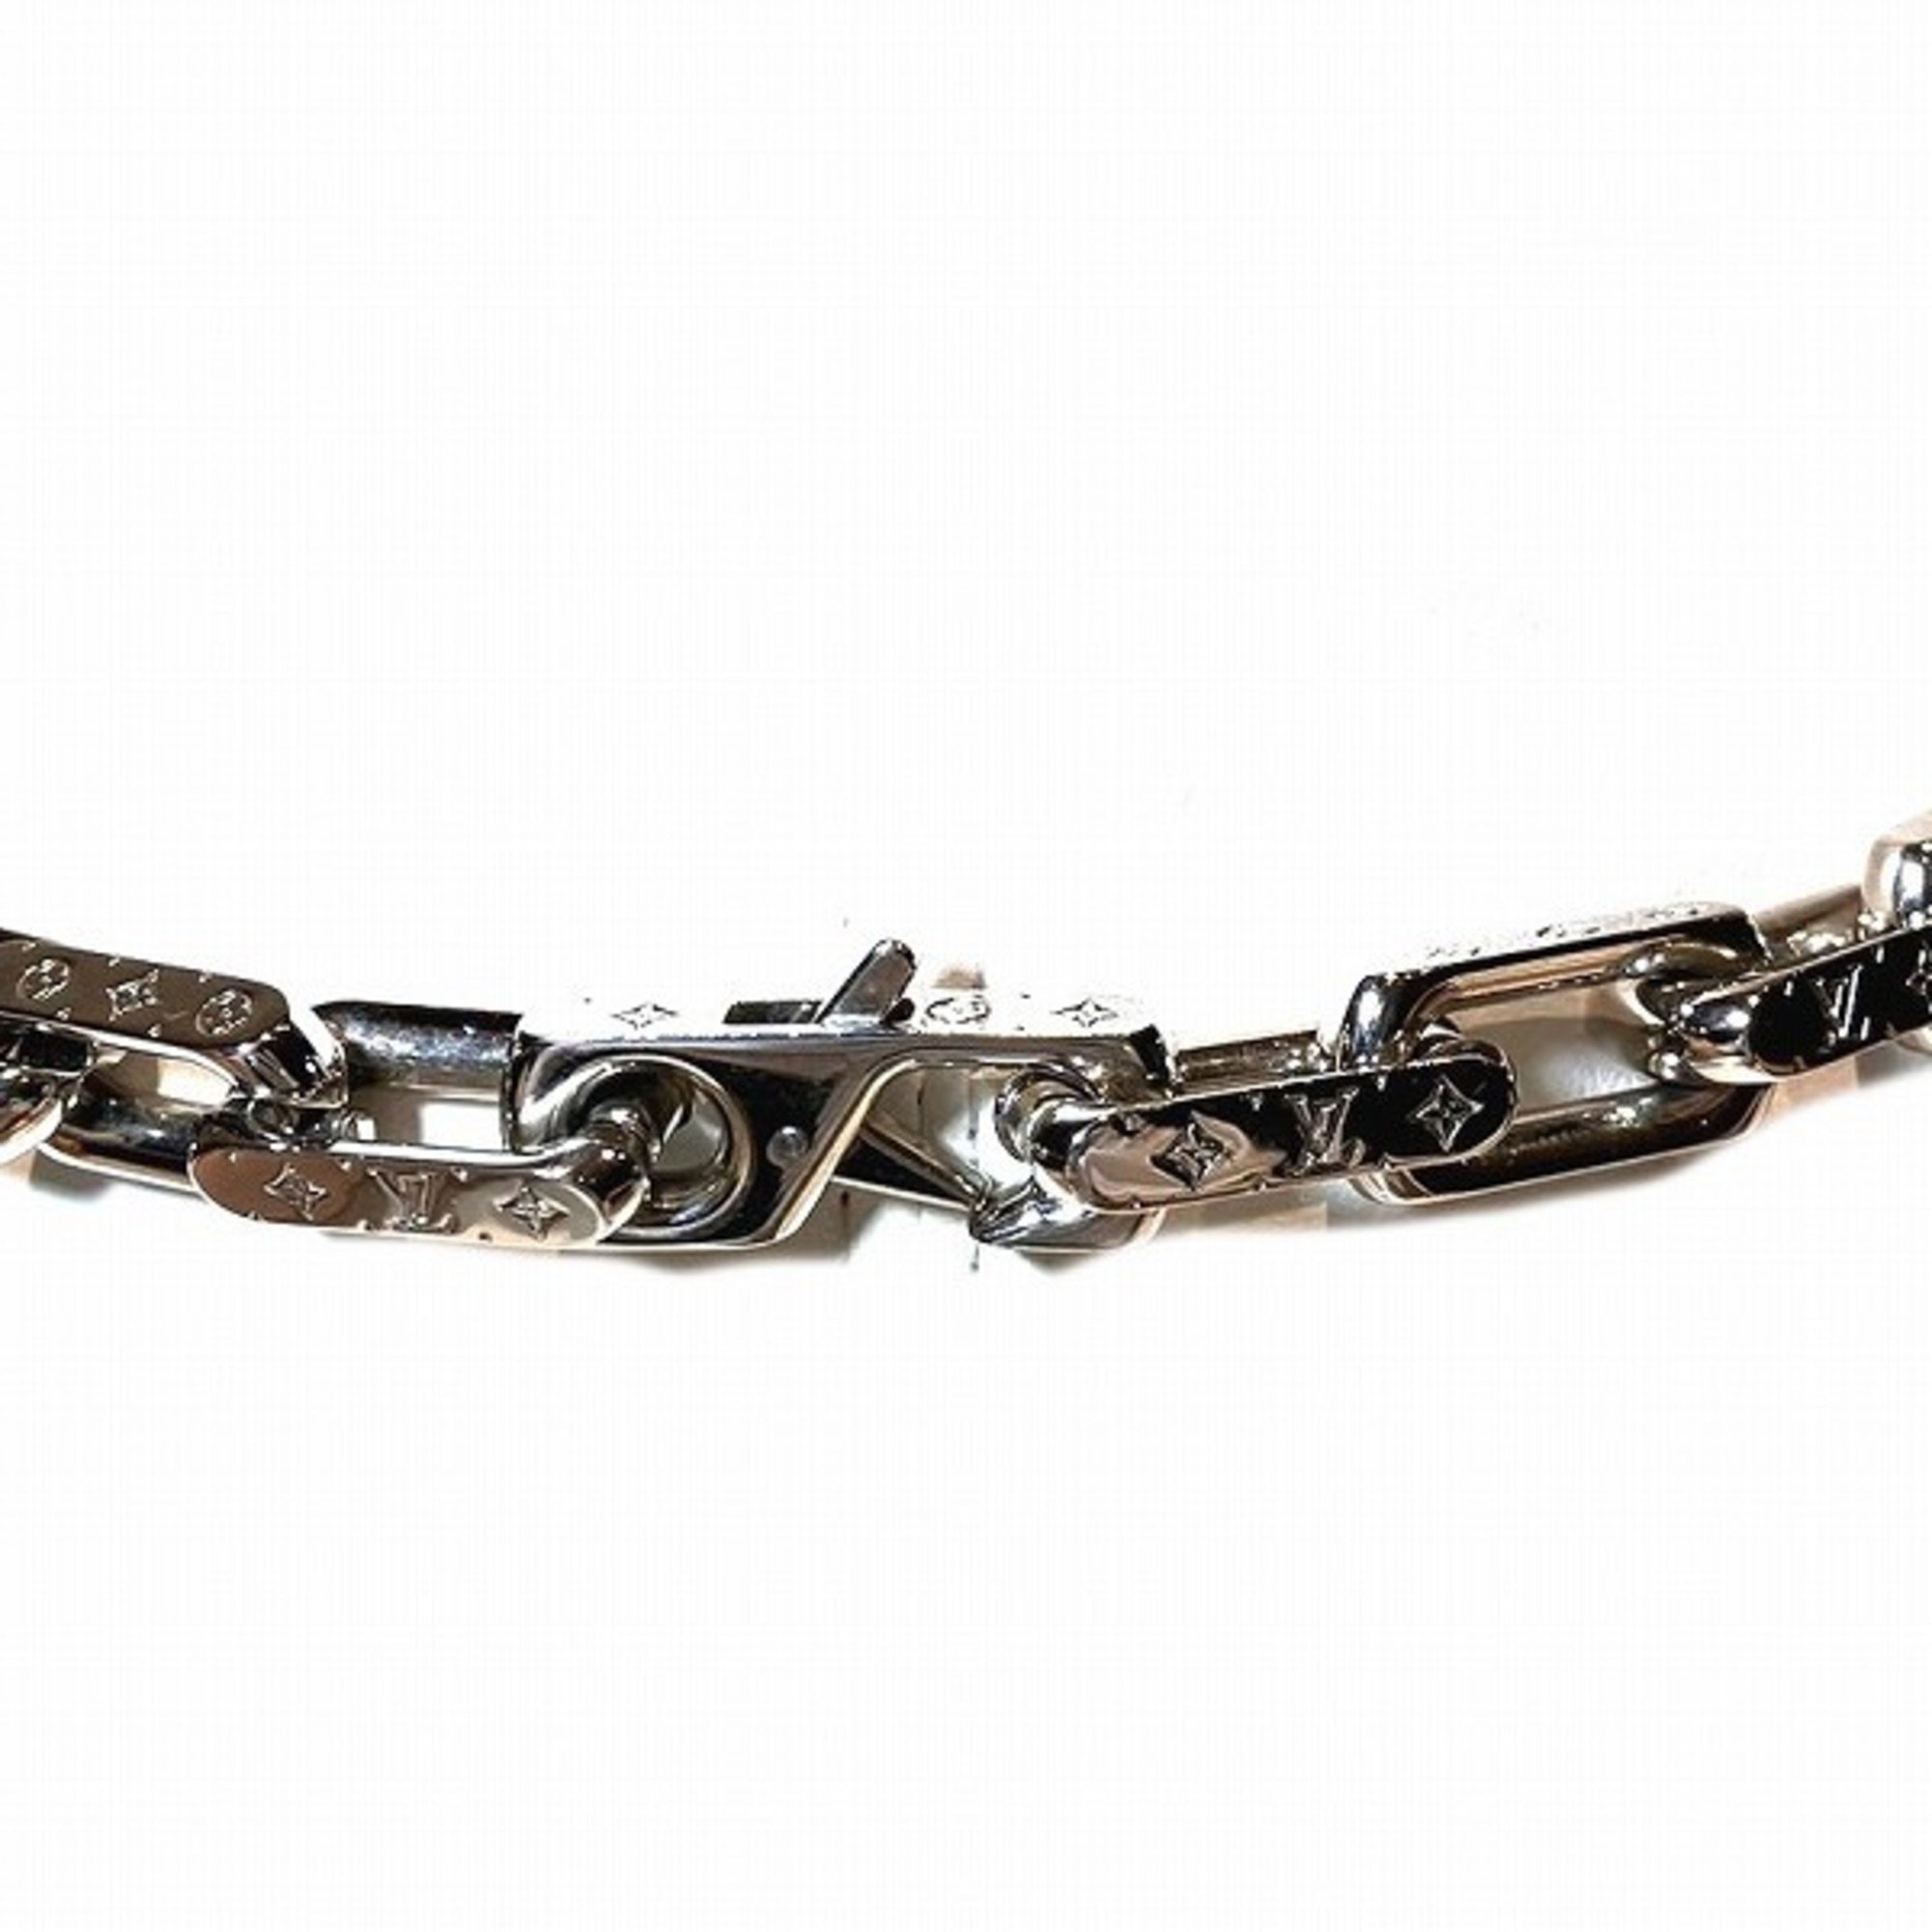 Louis Vuitton Collier Chain Monogram Necklace M64196 Brand Accessories Unisex